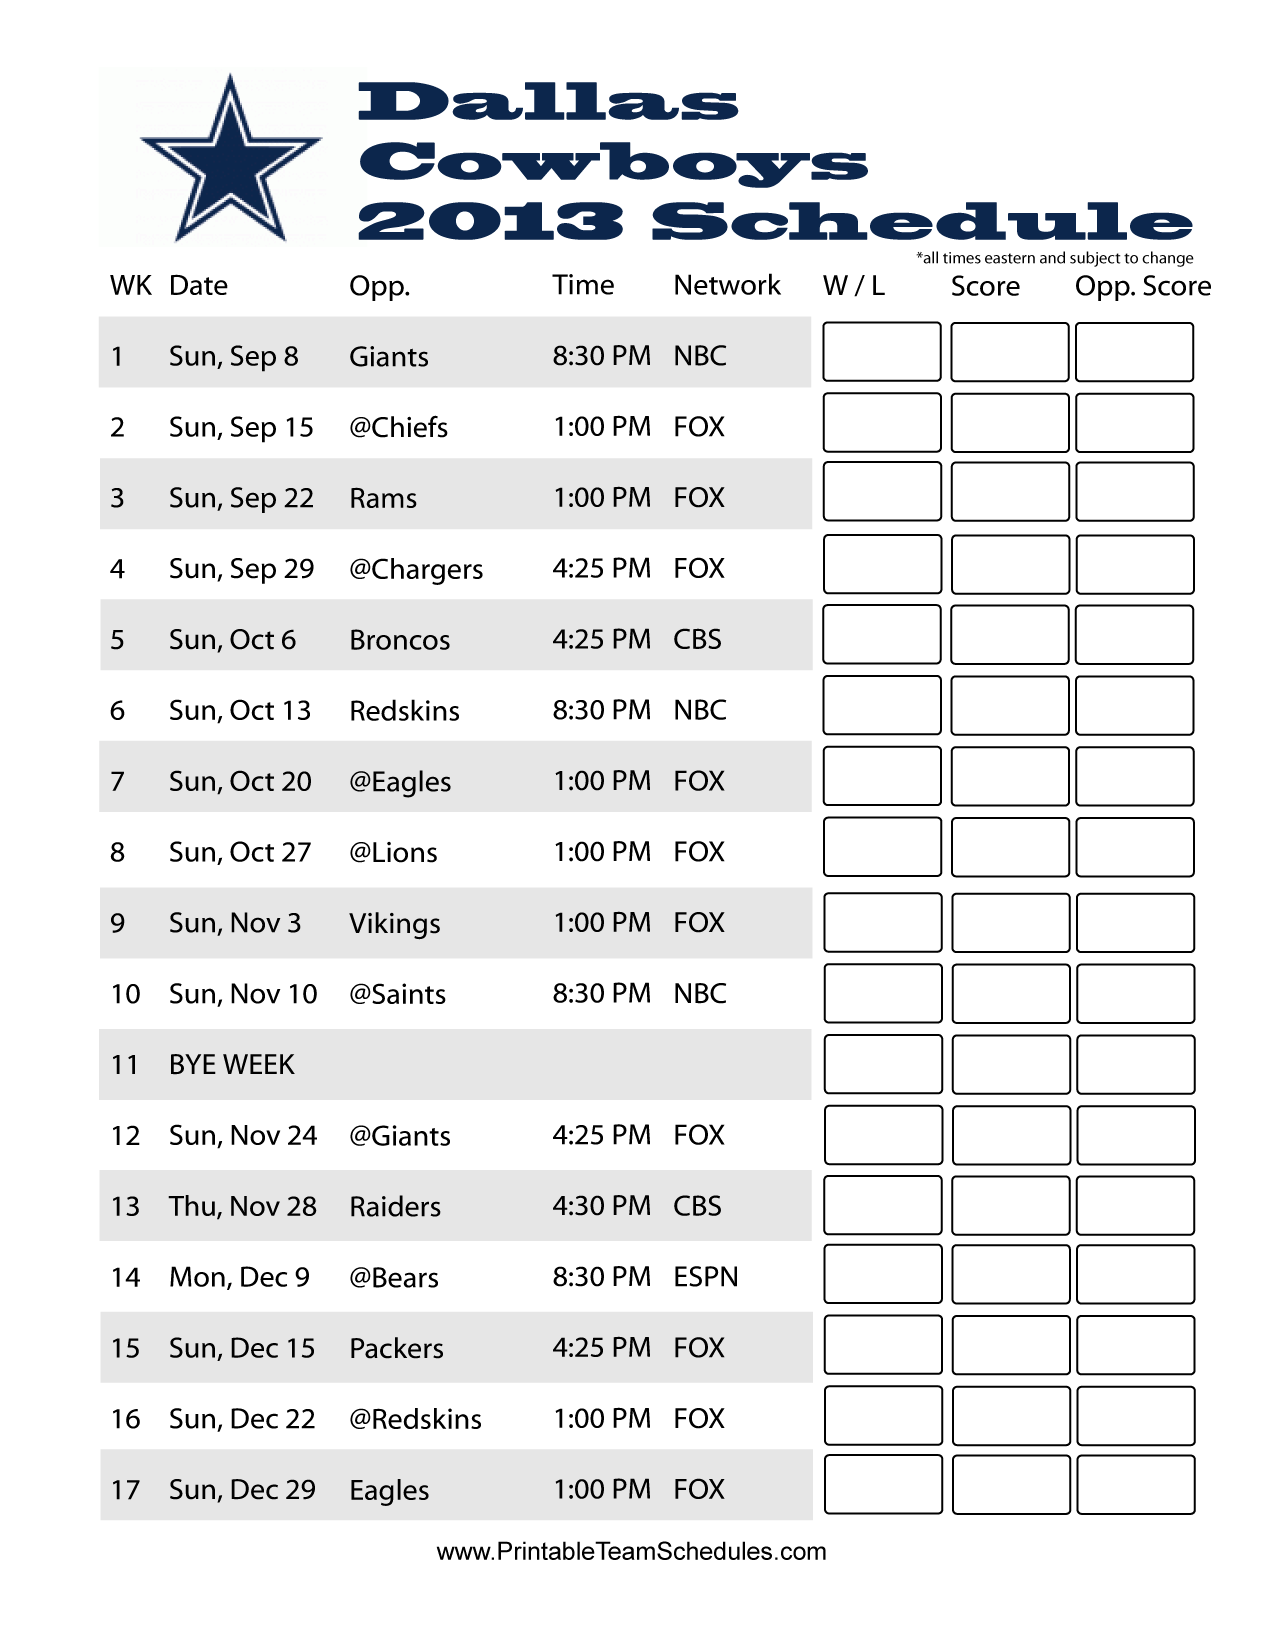 [49+] 2016 Dallas Cowboys Schedule Wallpaper - WallpaperSafari